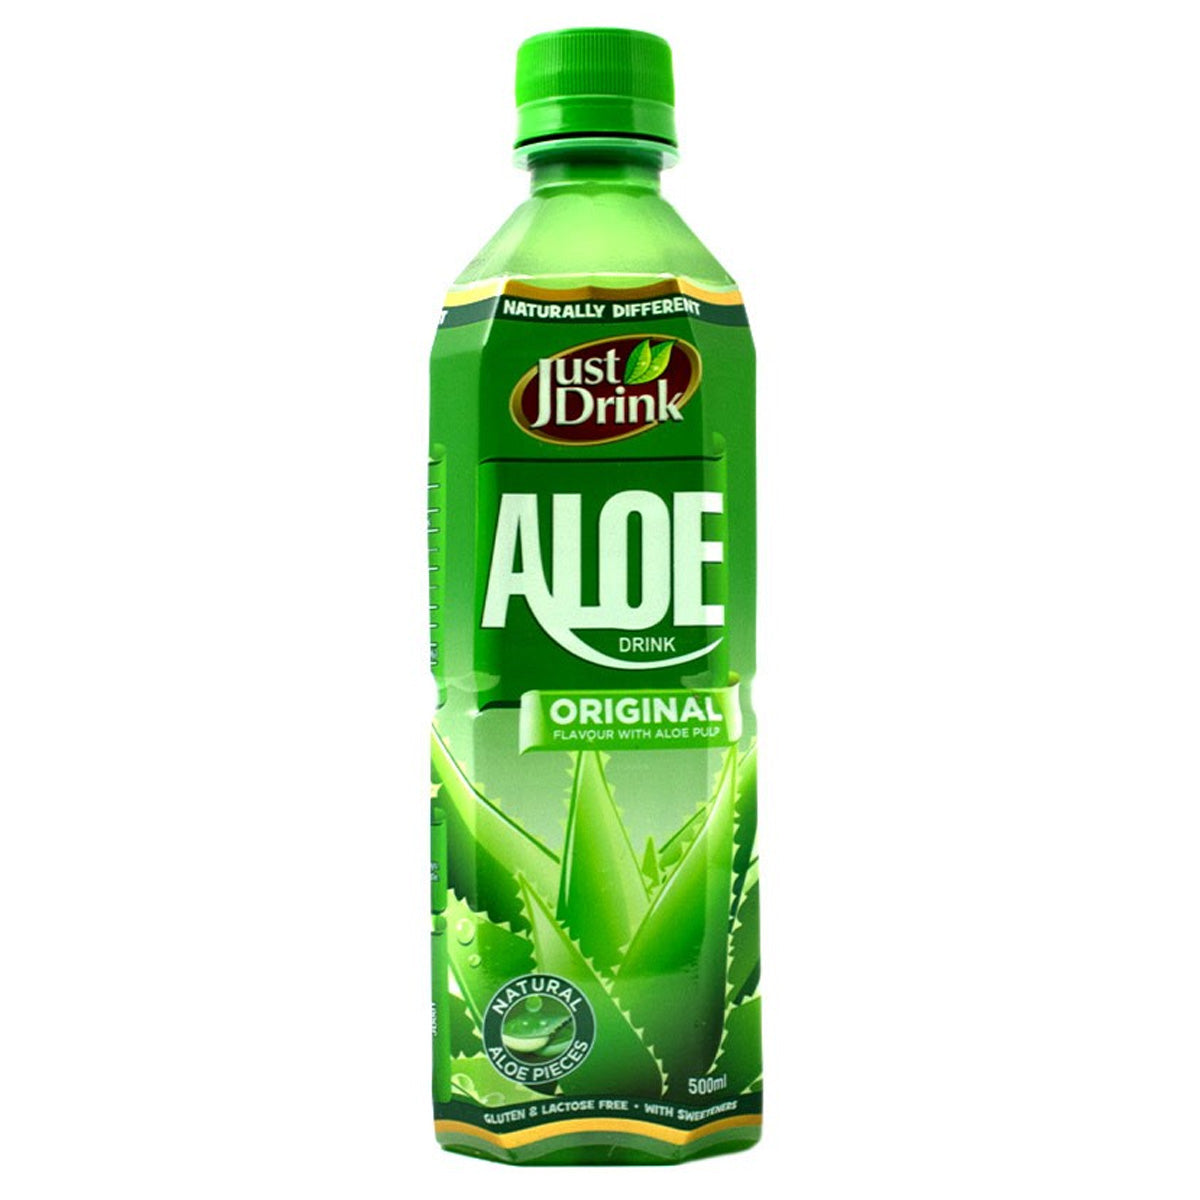 Just Drink - Aloe Original - 500ml - Continental Food Store